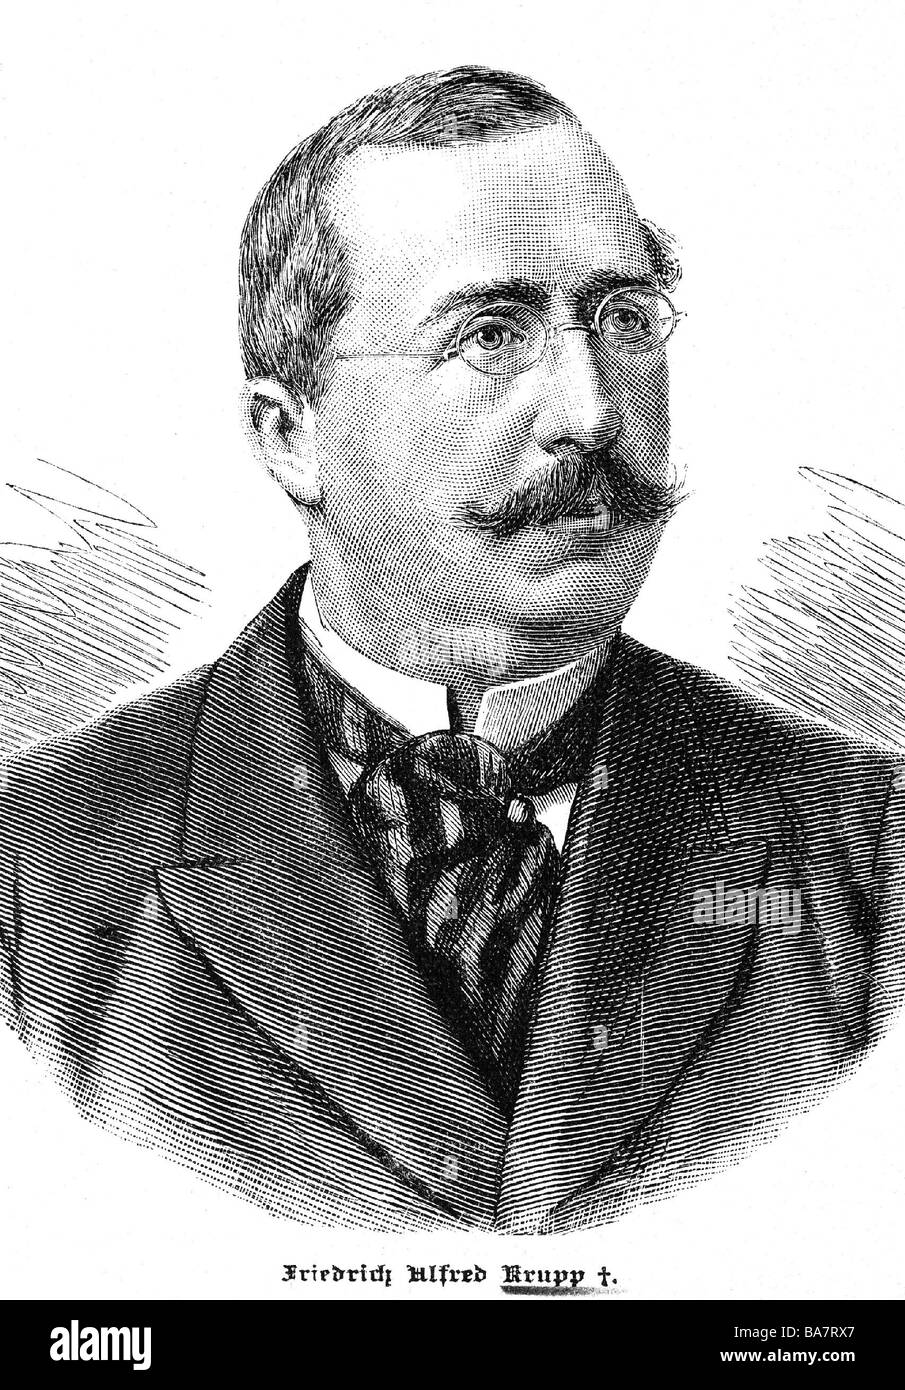 Krupp, Friedrich Alfred, 17.2.1854 - 22.11.1902, German industrialist, portrait, circa 1890, Stock Photo